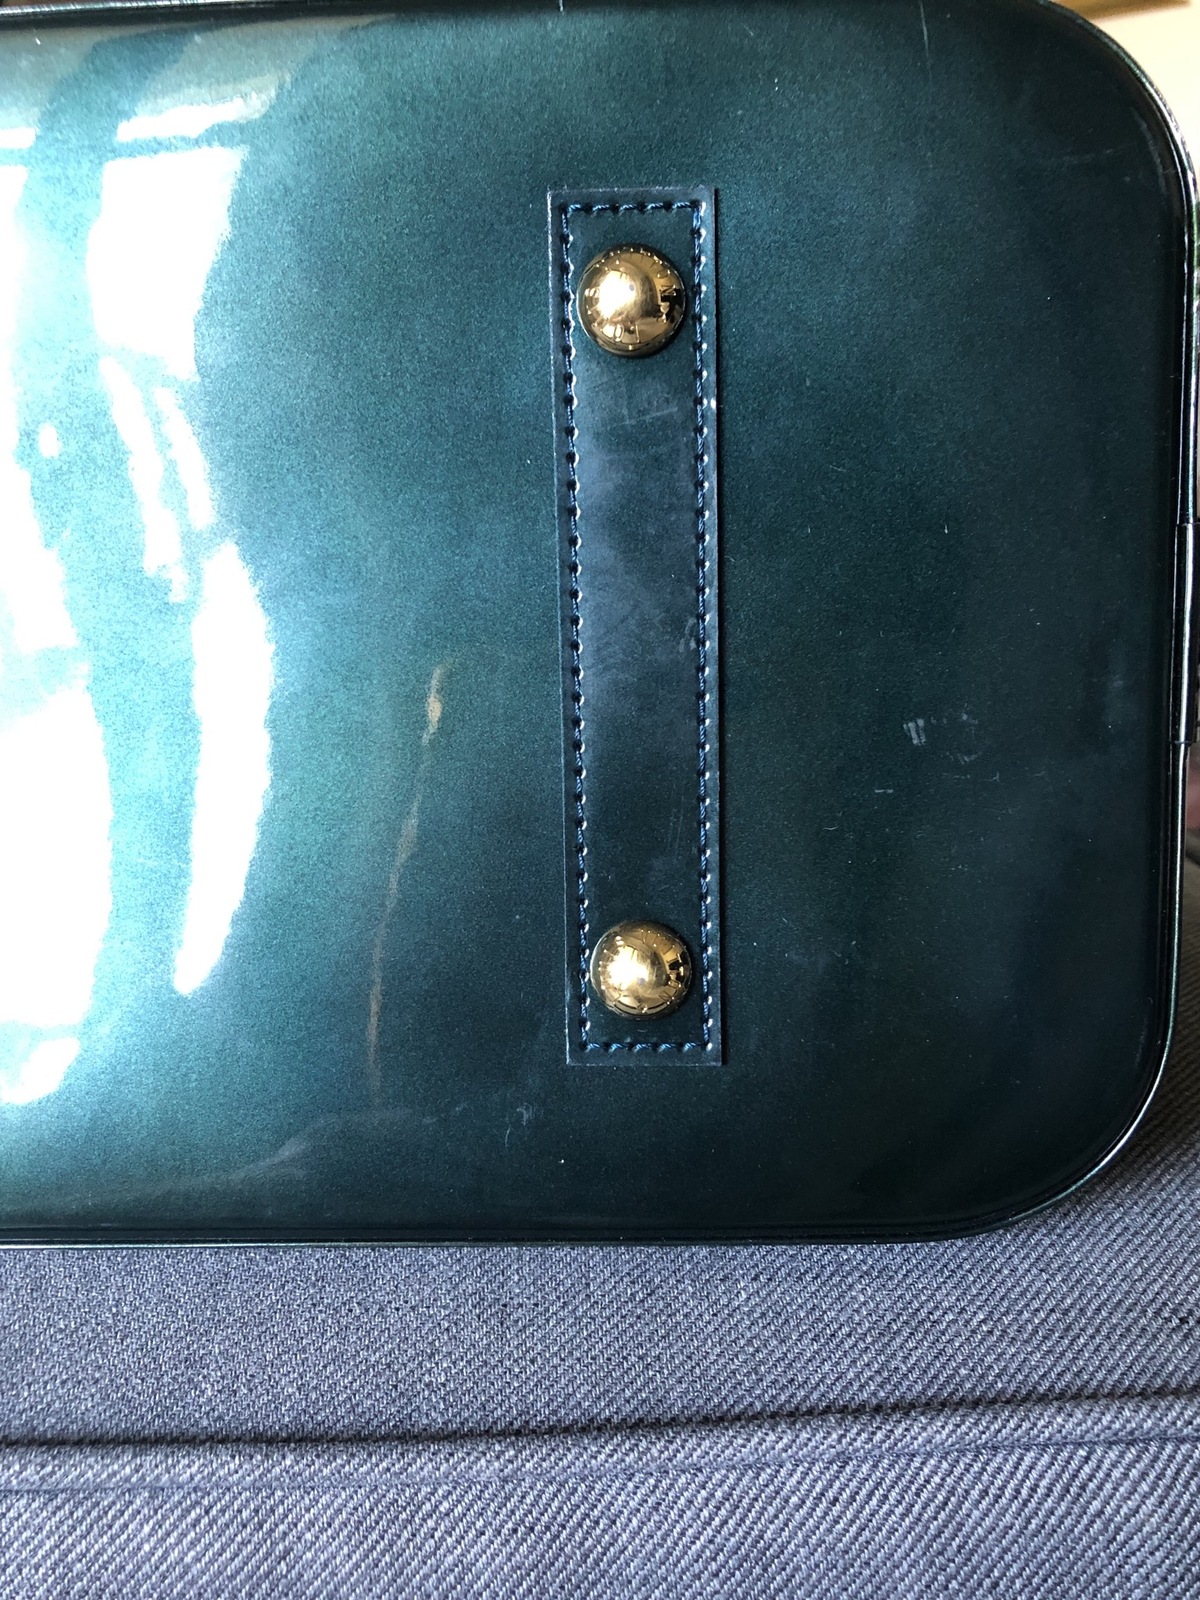 100% Authentic Louis Vuitton Vernis Alma Monogram MM Handbag - Handbags & Purses